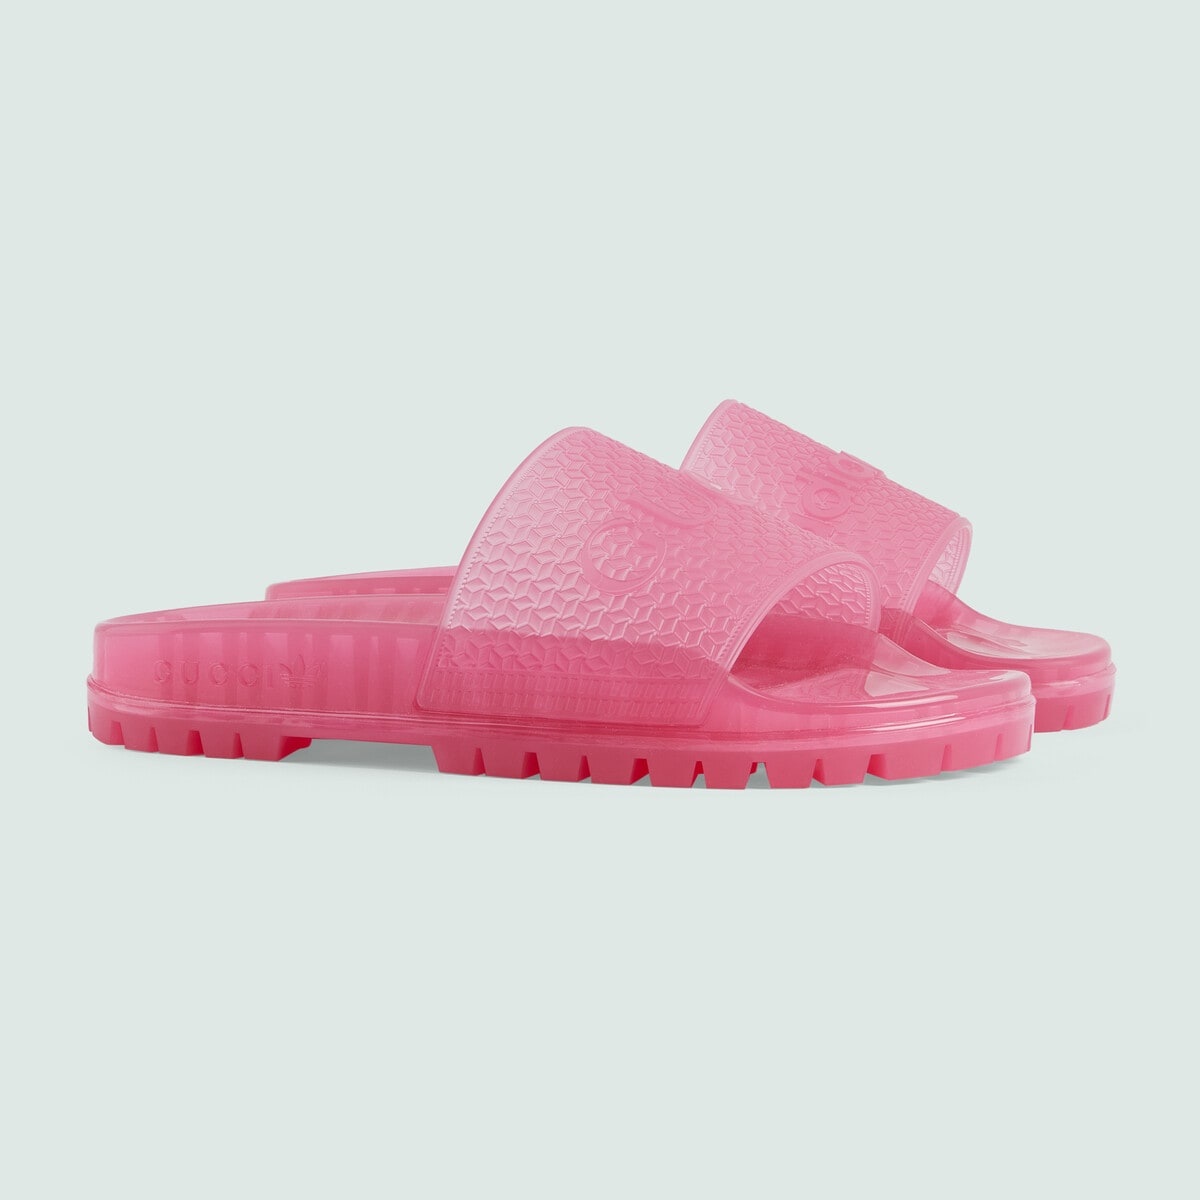 adidas x Gucci women's rubber slide sandal - 2